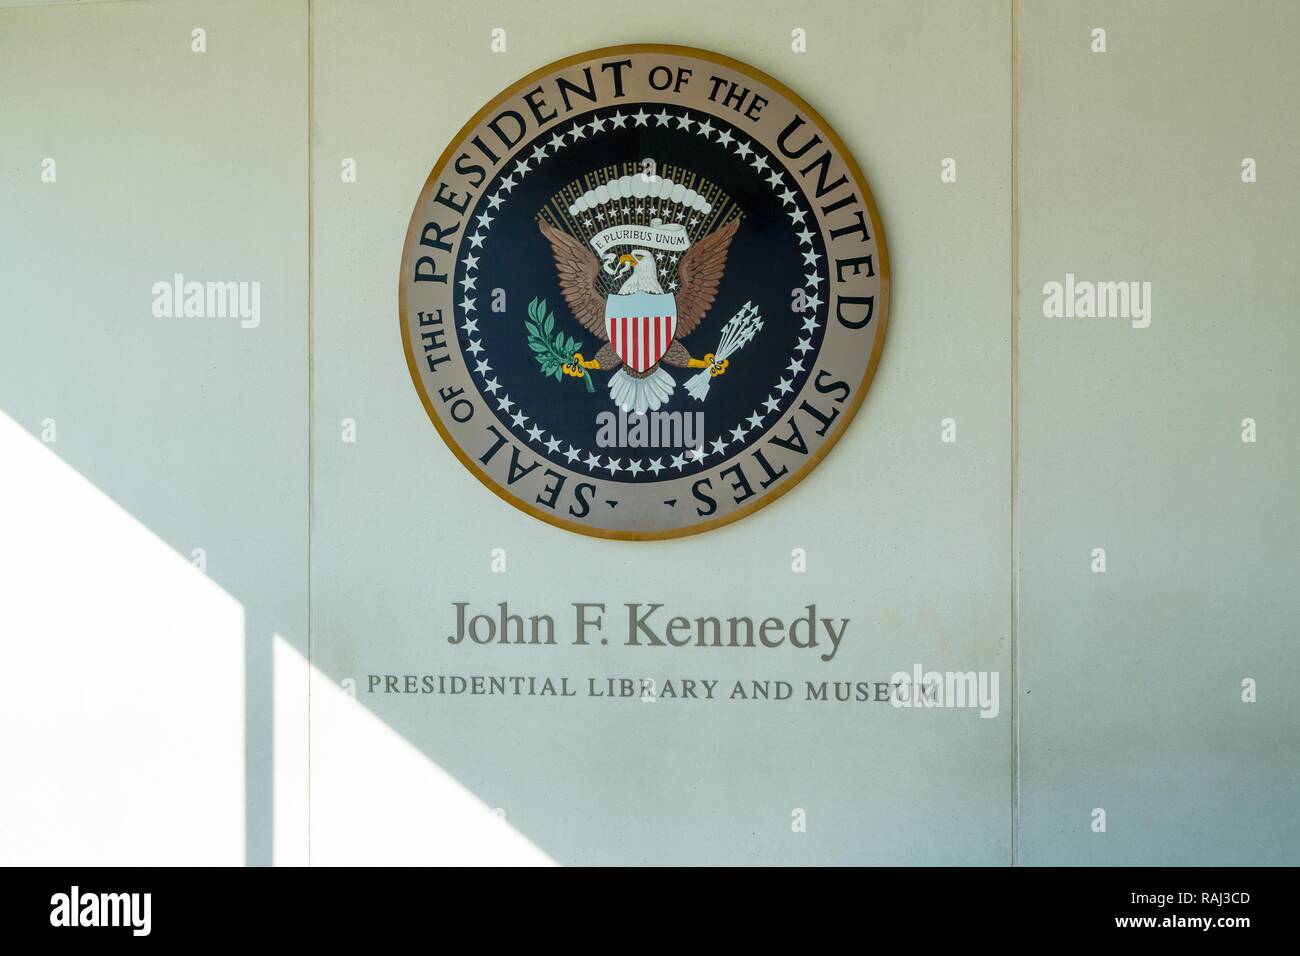 John F. Kennedy Presidential Library und Museum, Schriftzug und Wappen, Boston, Massachusetts, USA Stockfoto